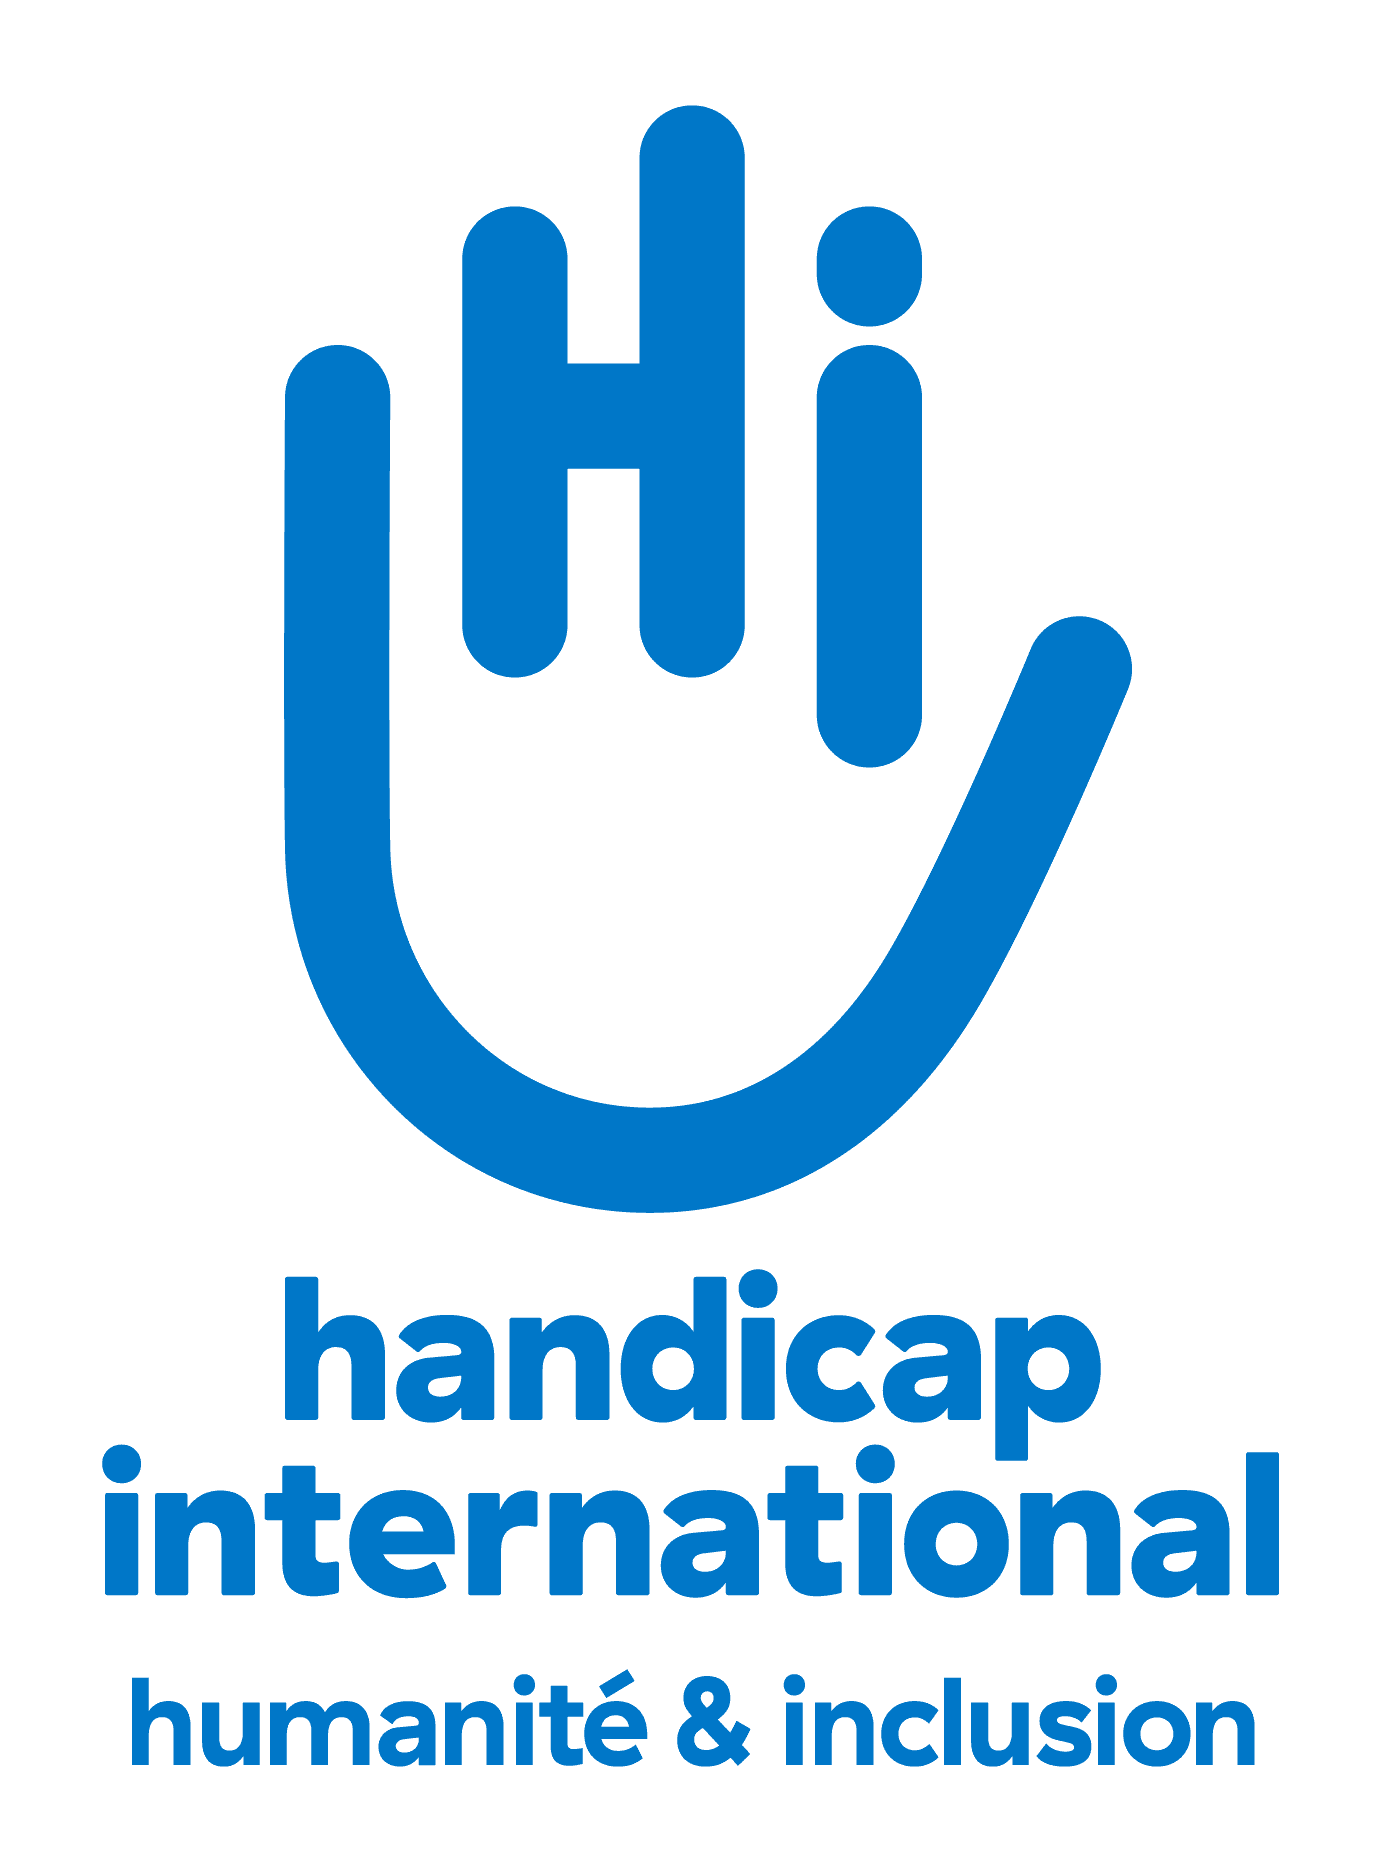 handicap international